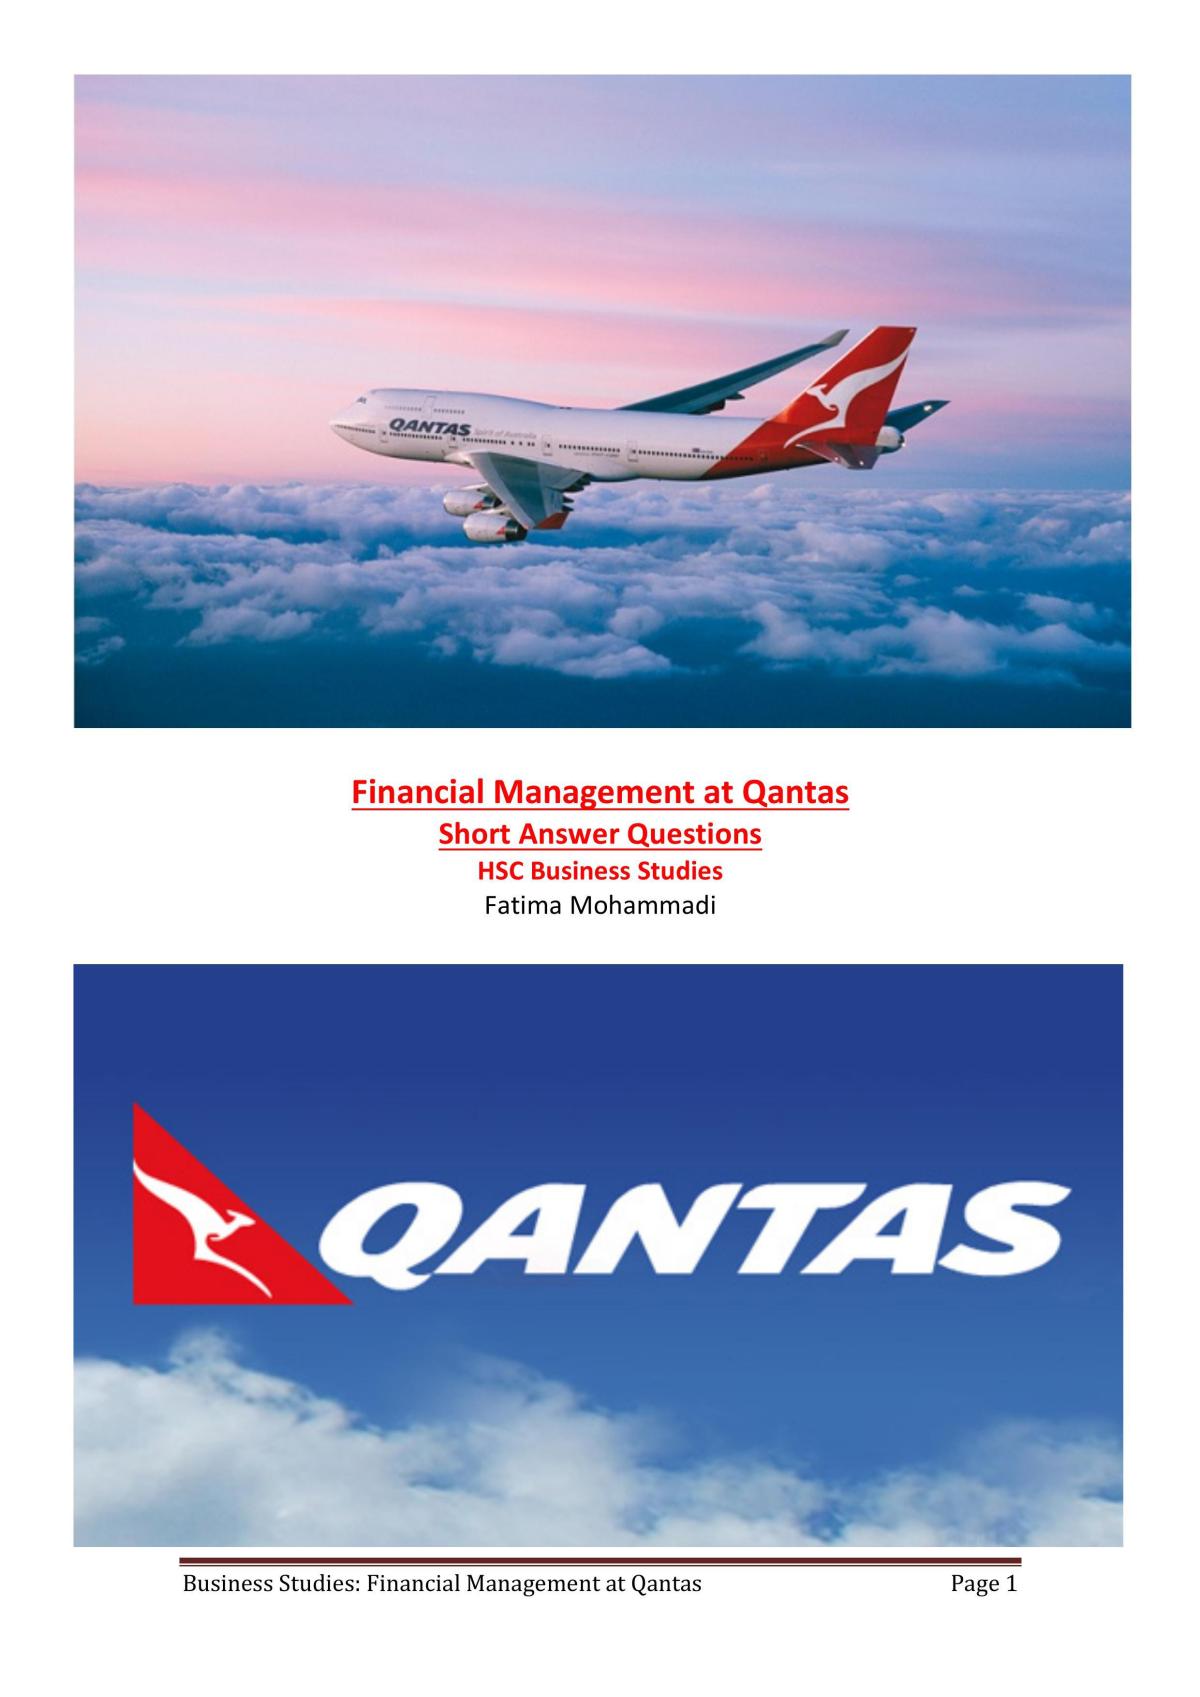 qantas case study notes